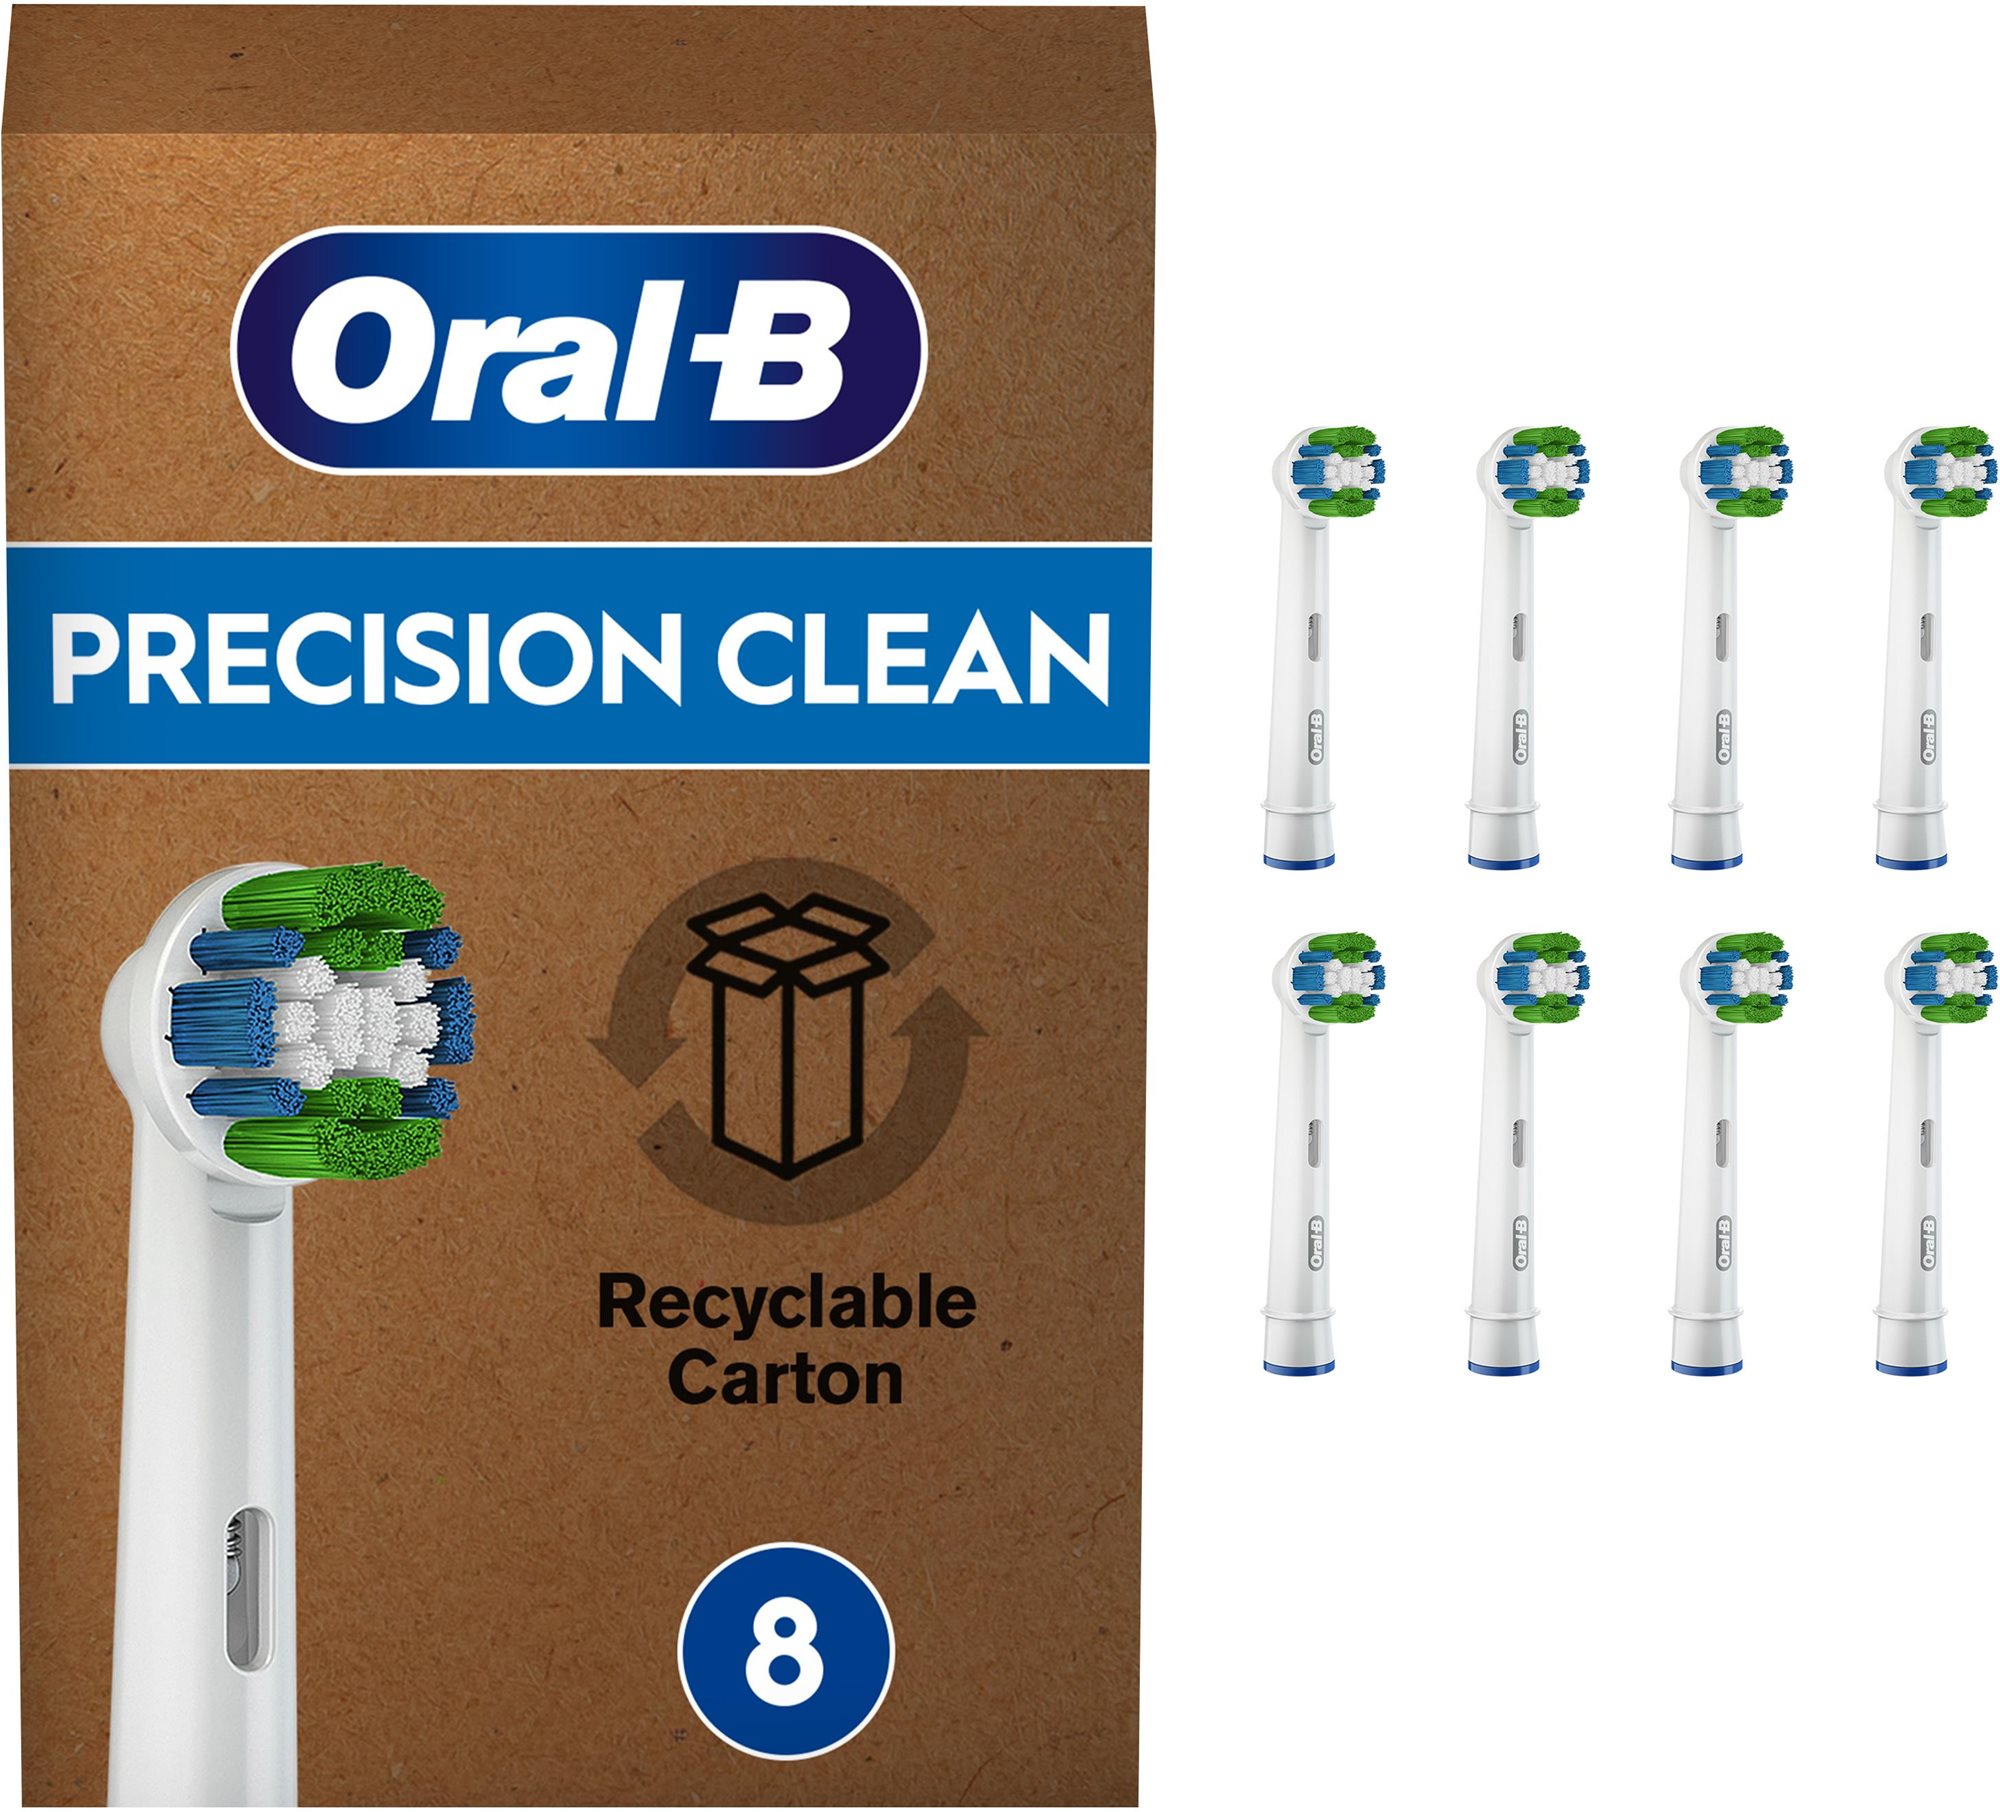 Elektromos fogkefe fej Oral-B Precision Clean elektromos fogkefe pótfej, 8 db